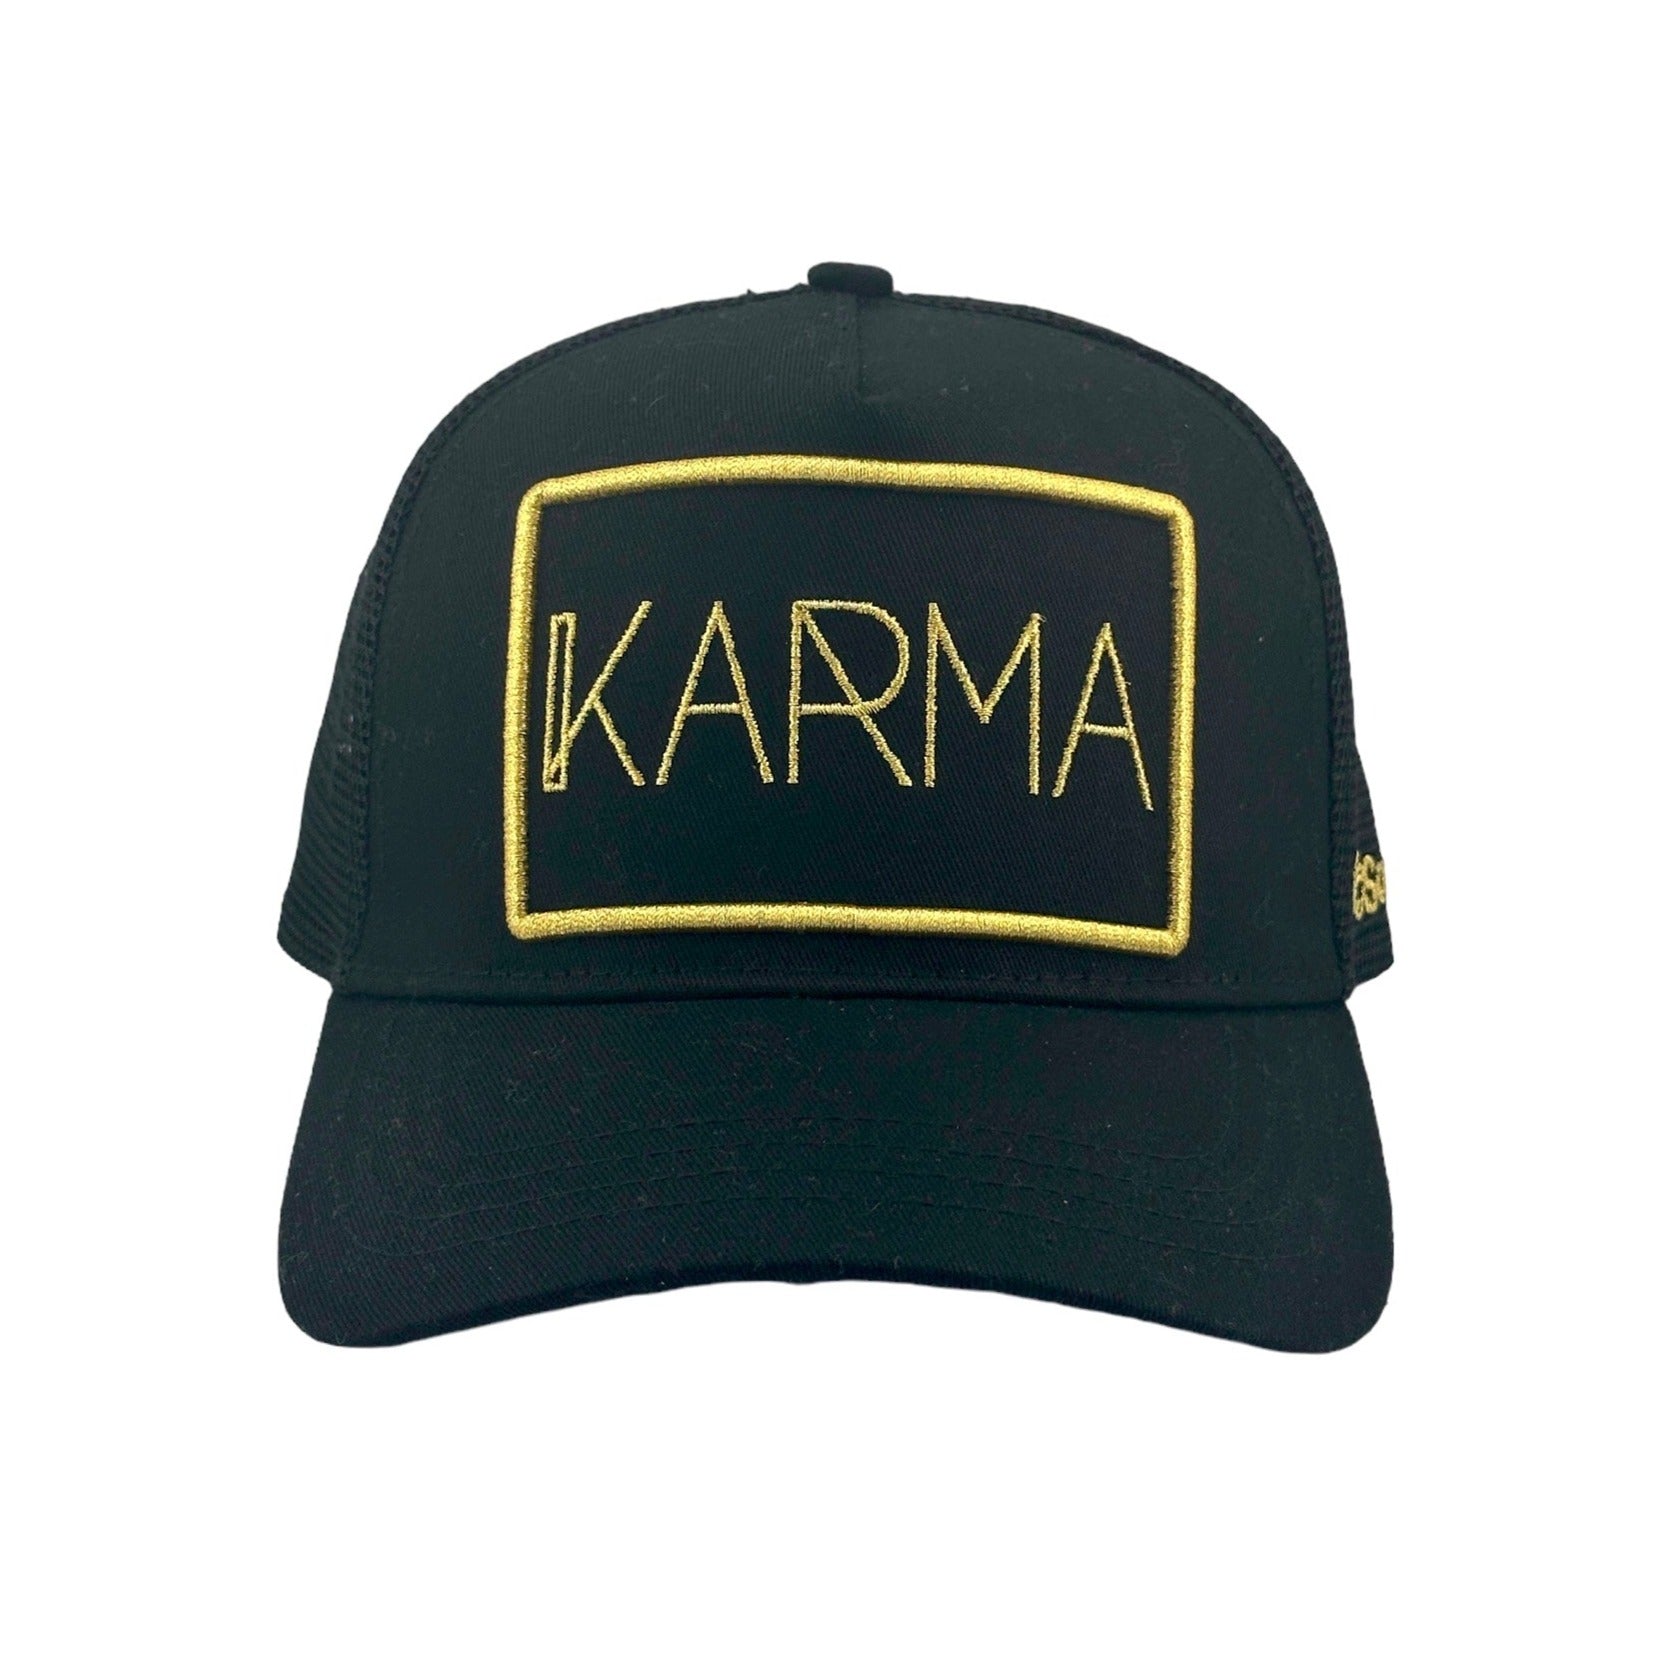 Karma Trucker - Black/Gold